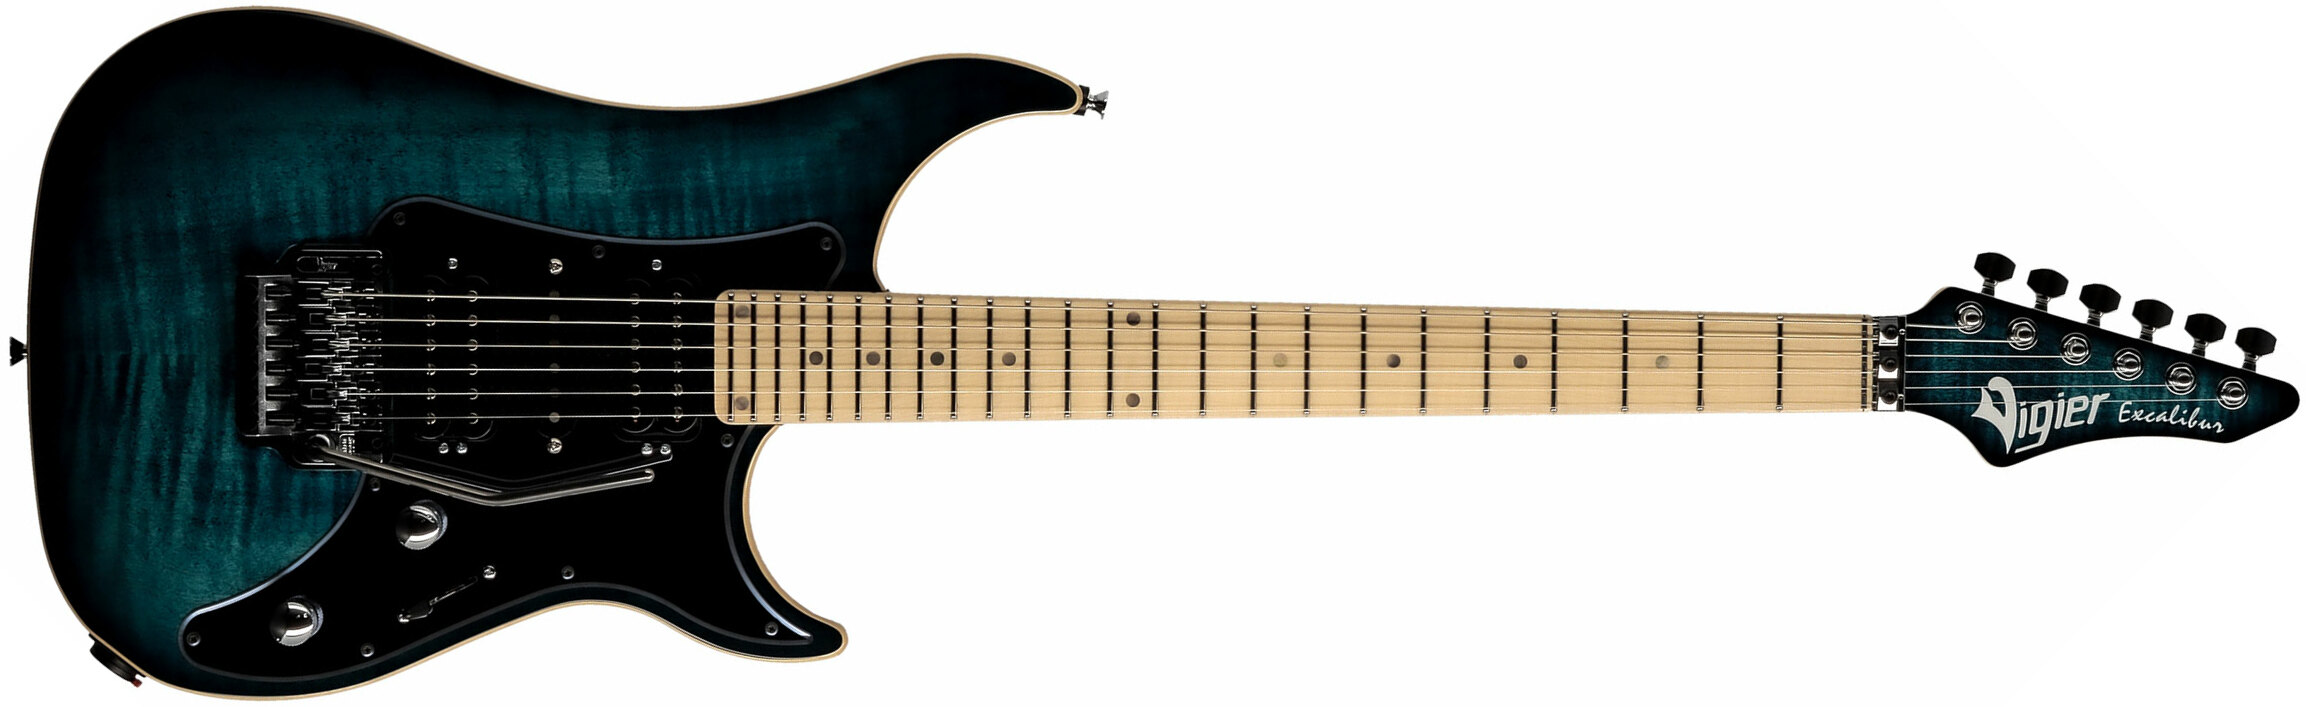 Vigier Excalibur Custom Hsh Fr Mn - Mysterious Blue - E-Gitarre in Str-Form - Main picture